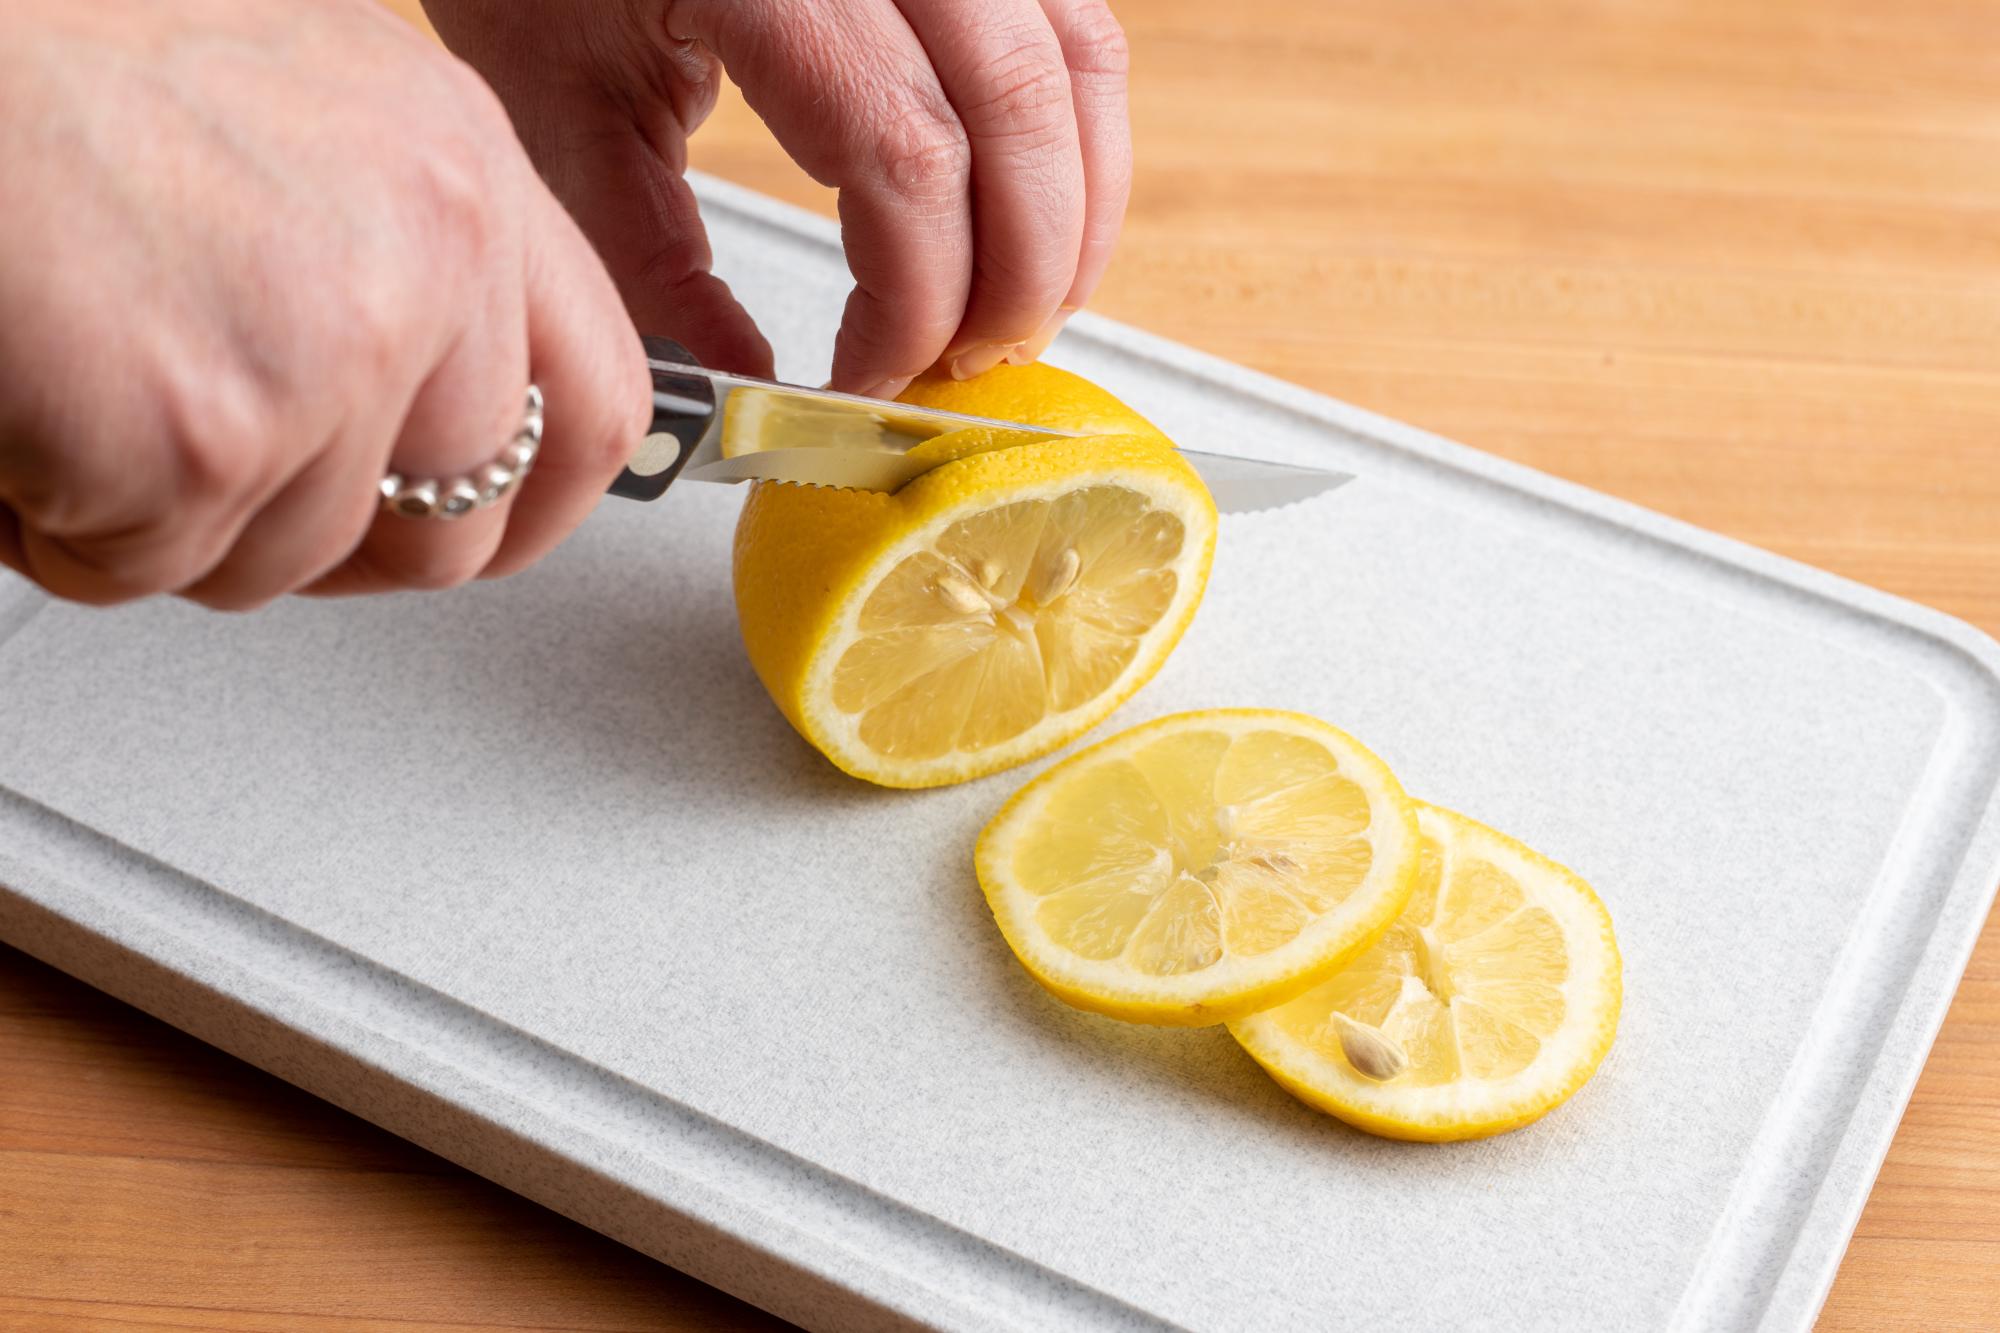 Using the Trimmer to make lemon slices.